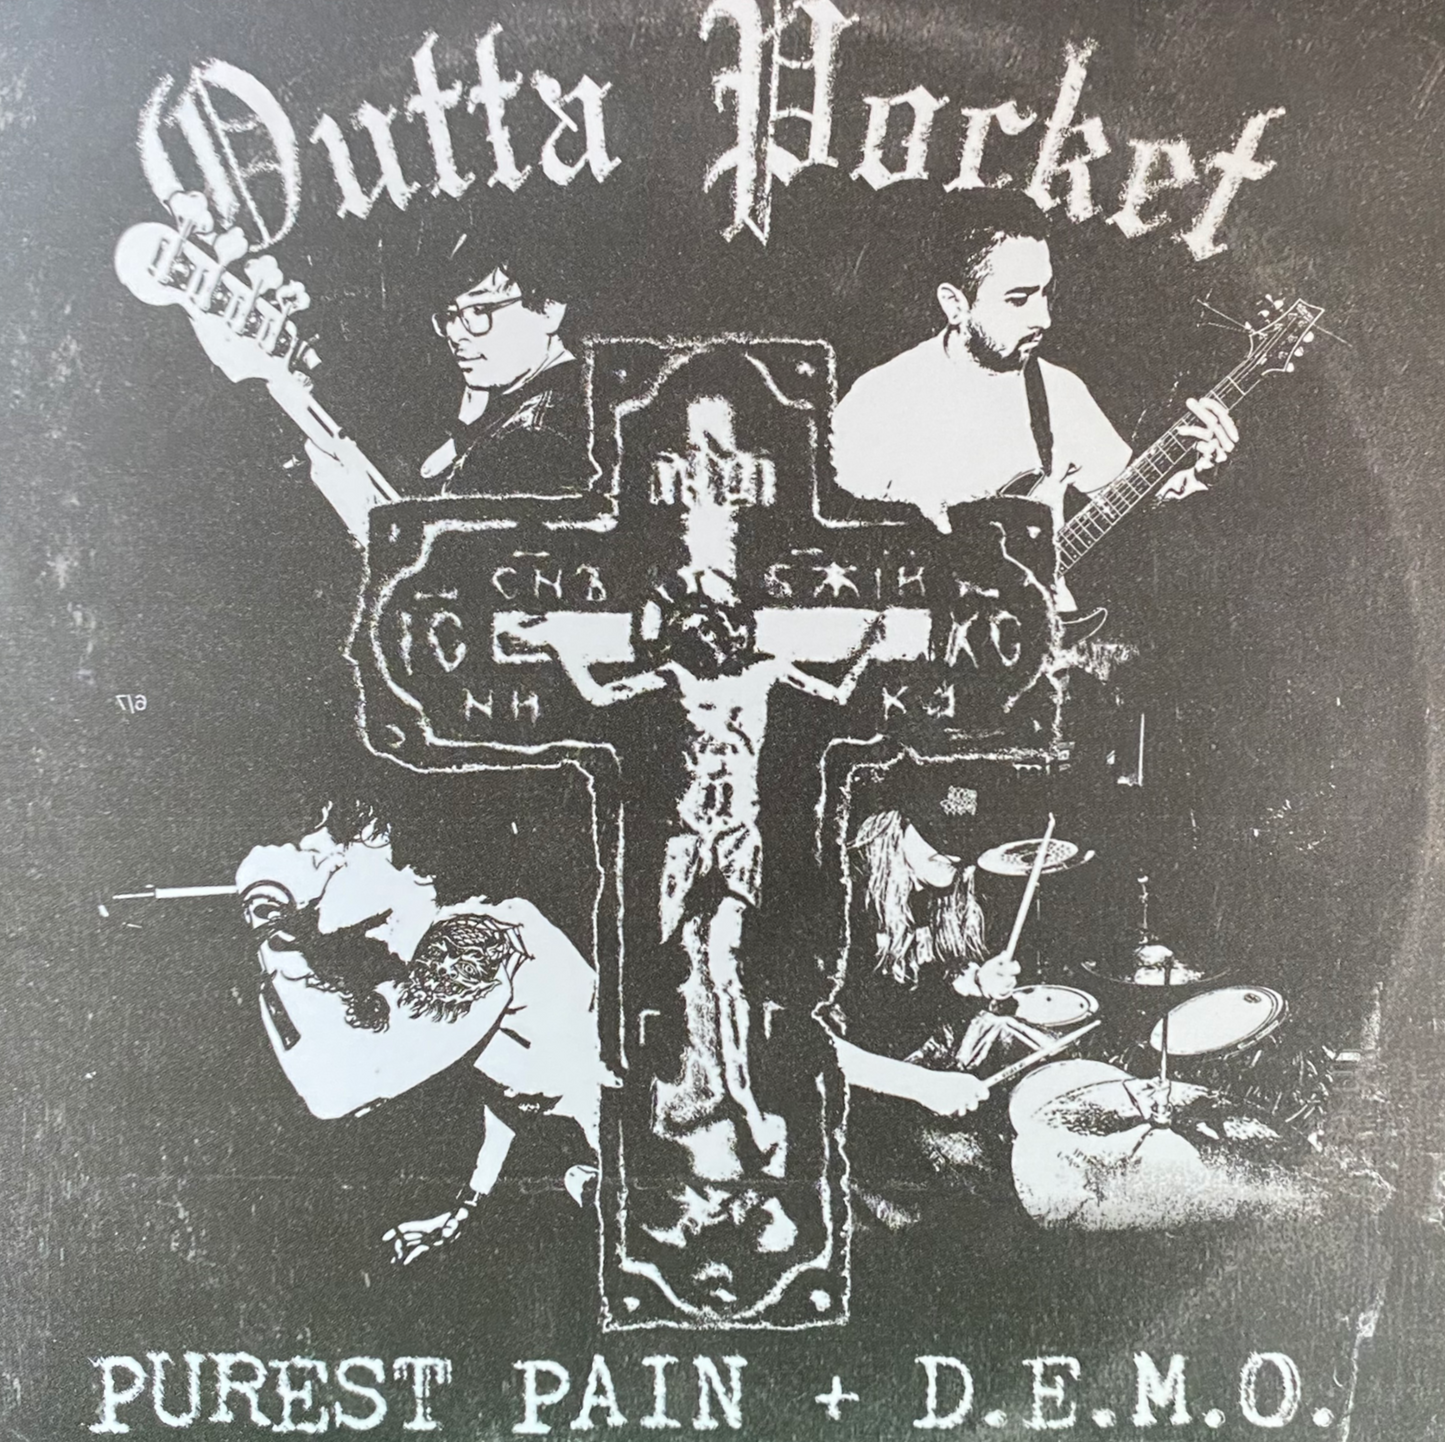 Outta Pocket  "Purest Pain & D.E.M.O" 7"